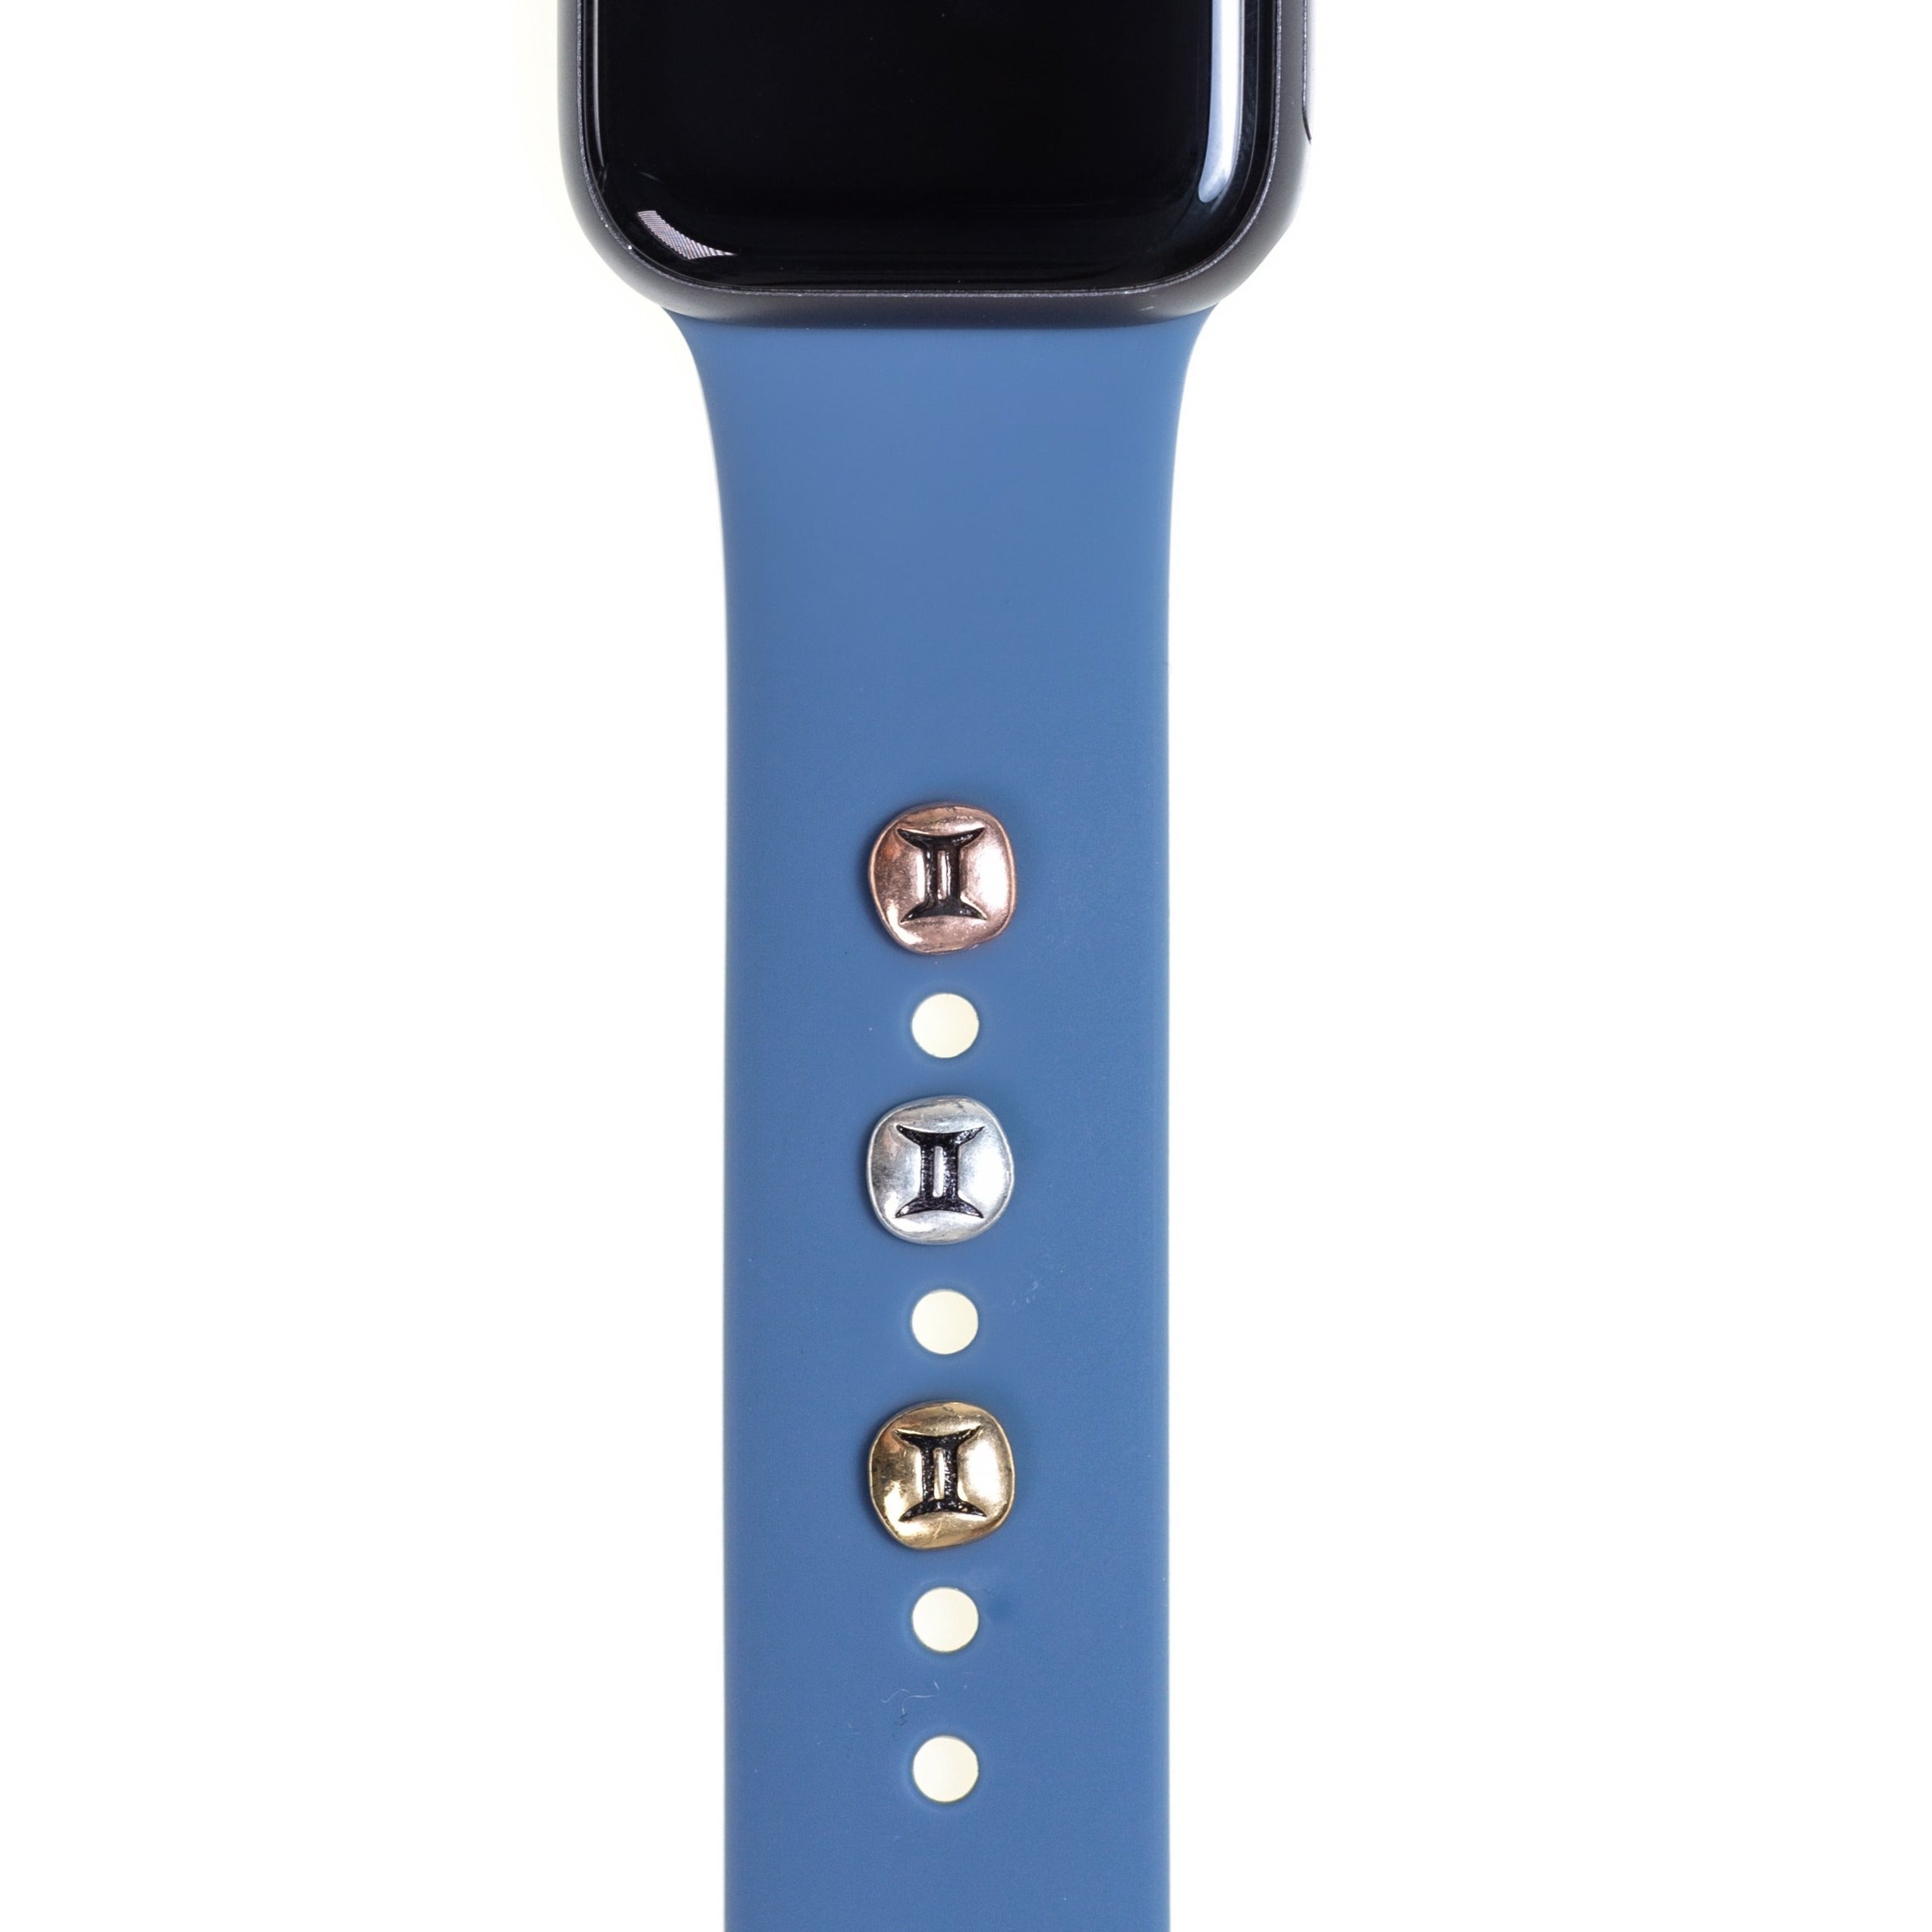 Zodiac Charm • Apple Watch Band's Charm